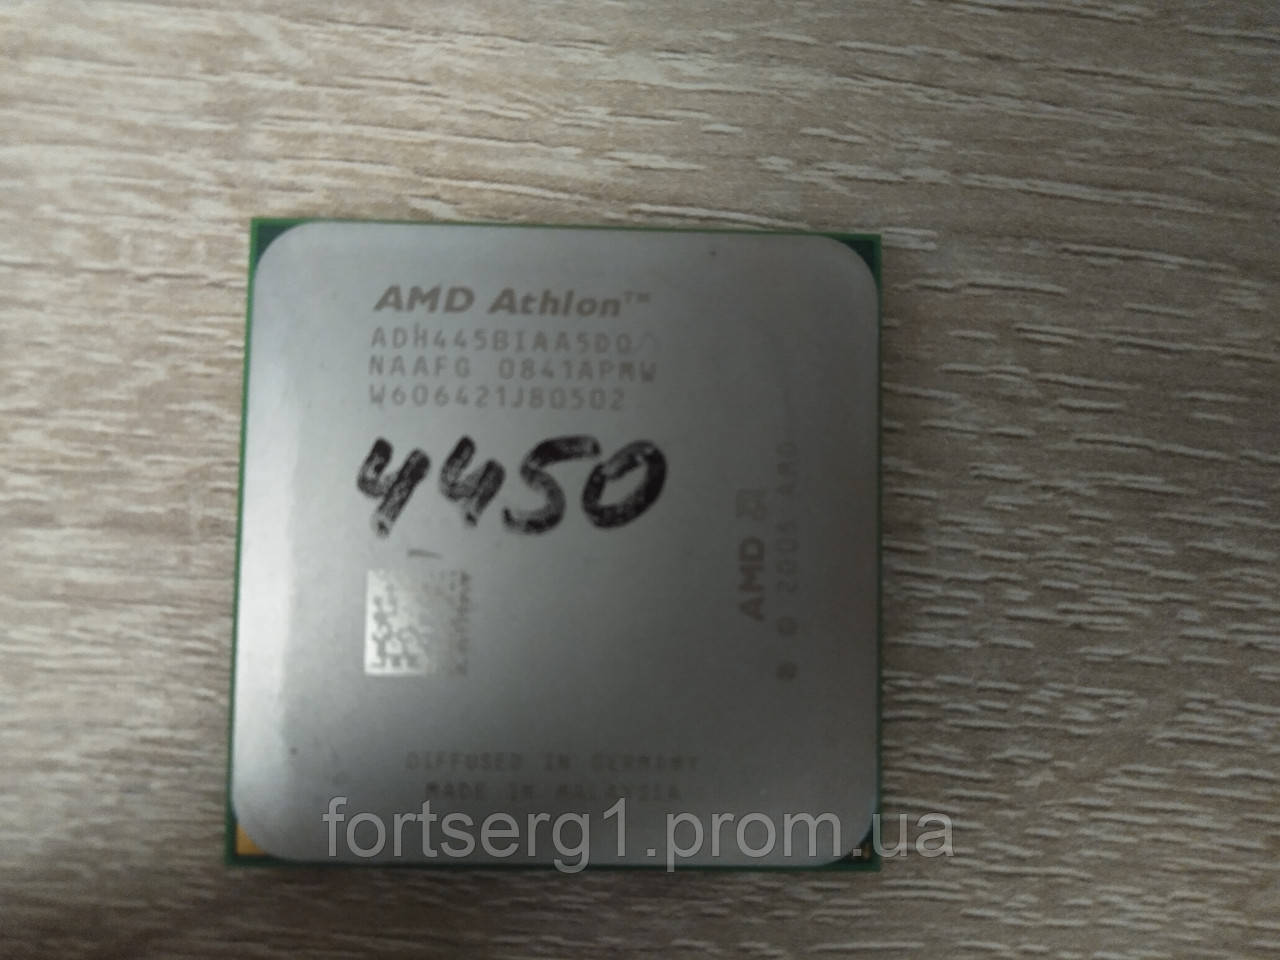 Процессор AMD Athlon X2 4450B - ADH445BIAA5DO, 2300 Mhz,ѕАМ2, цена 100 грн  - Prom.ua (ID#1484246244)